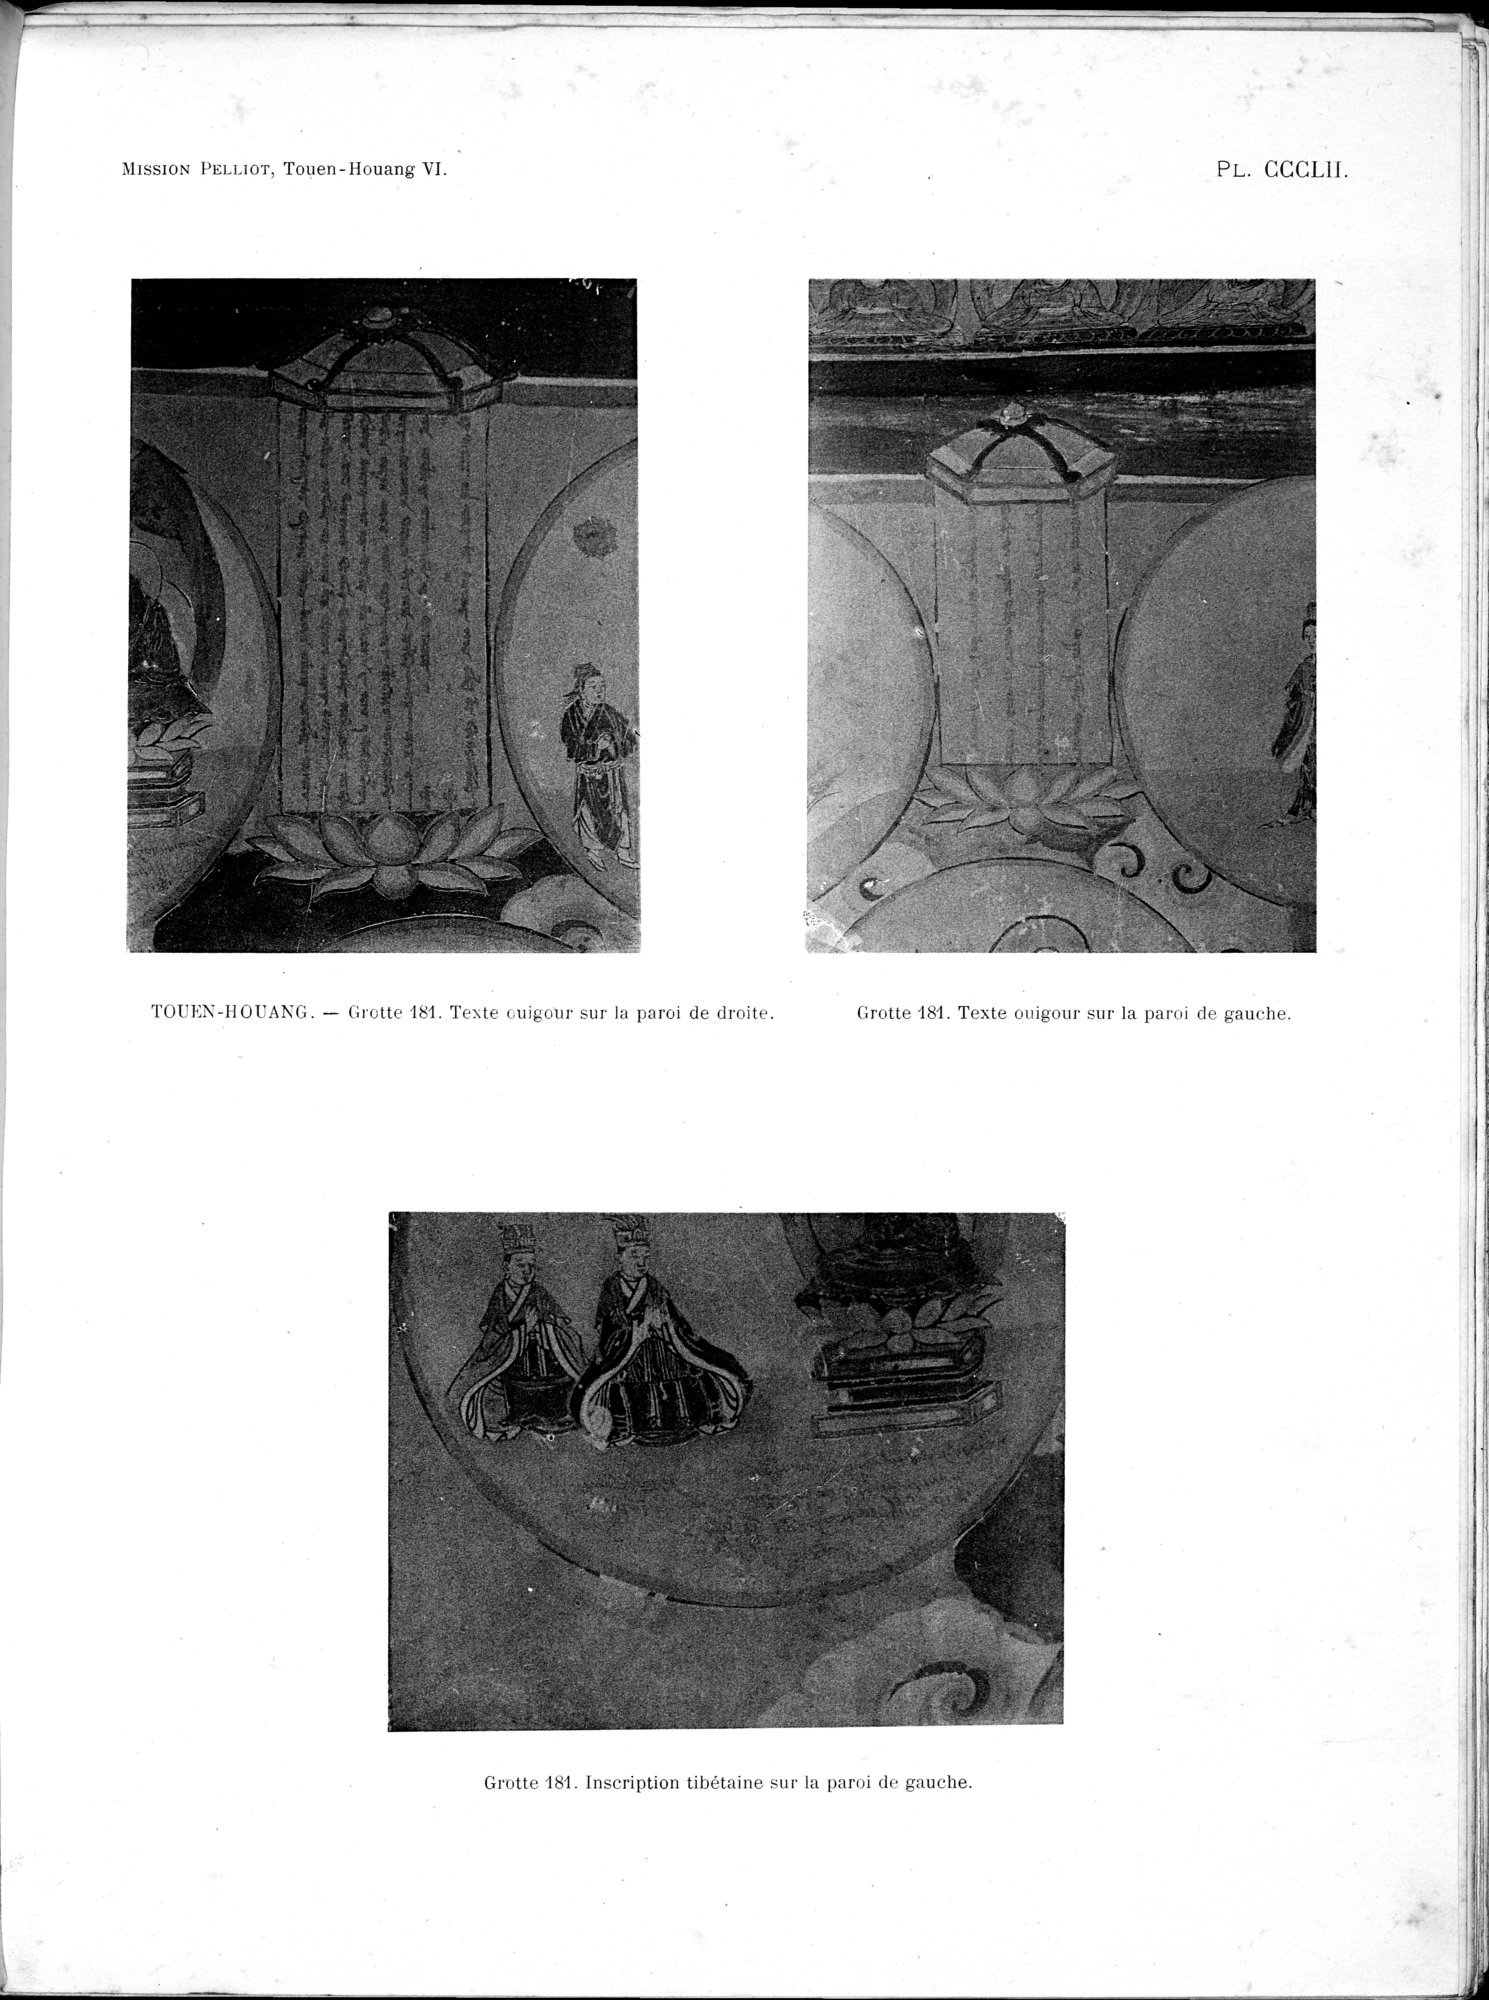 Les grottes de Touen-Houang : vol.6 / Page 71 (Grayscale High Resolution Image)